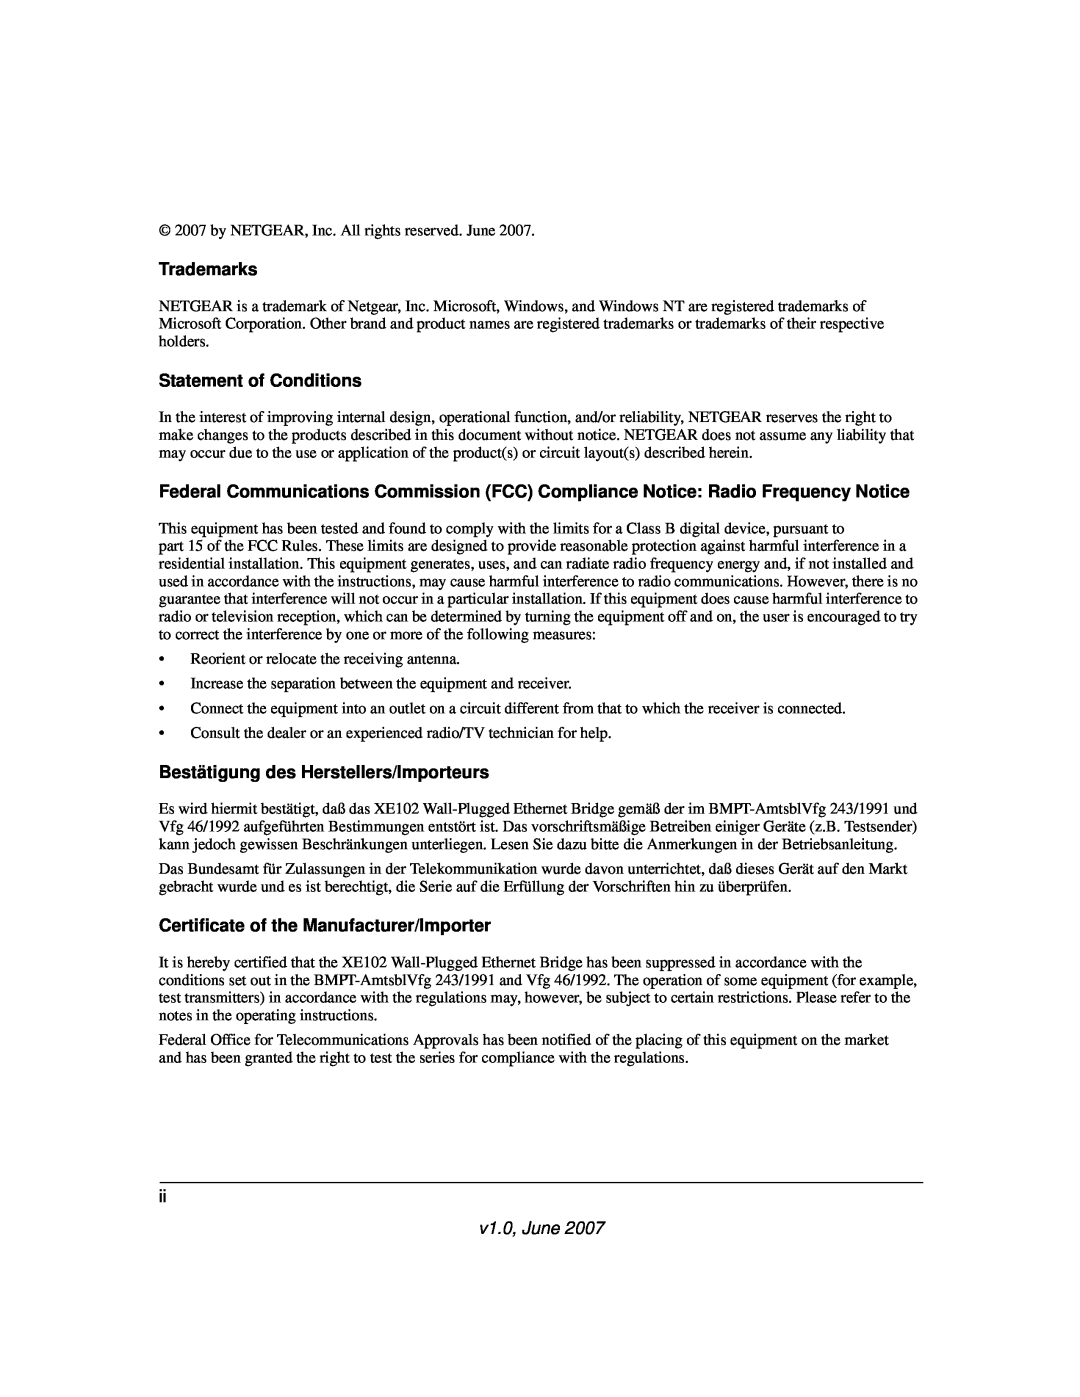 NETGEAR XE102 manual Trademarks, Statement of Conditions, Bestätigung des Herstellers/Importeurs, v1.0, June 